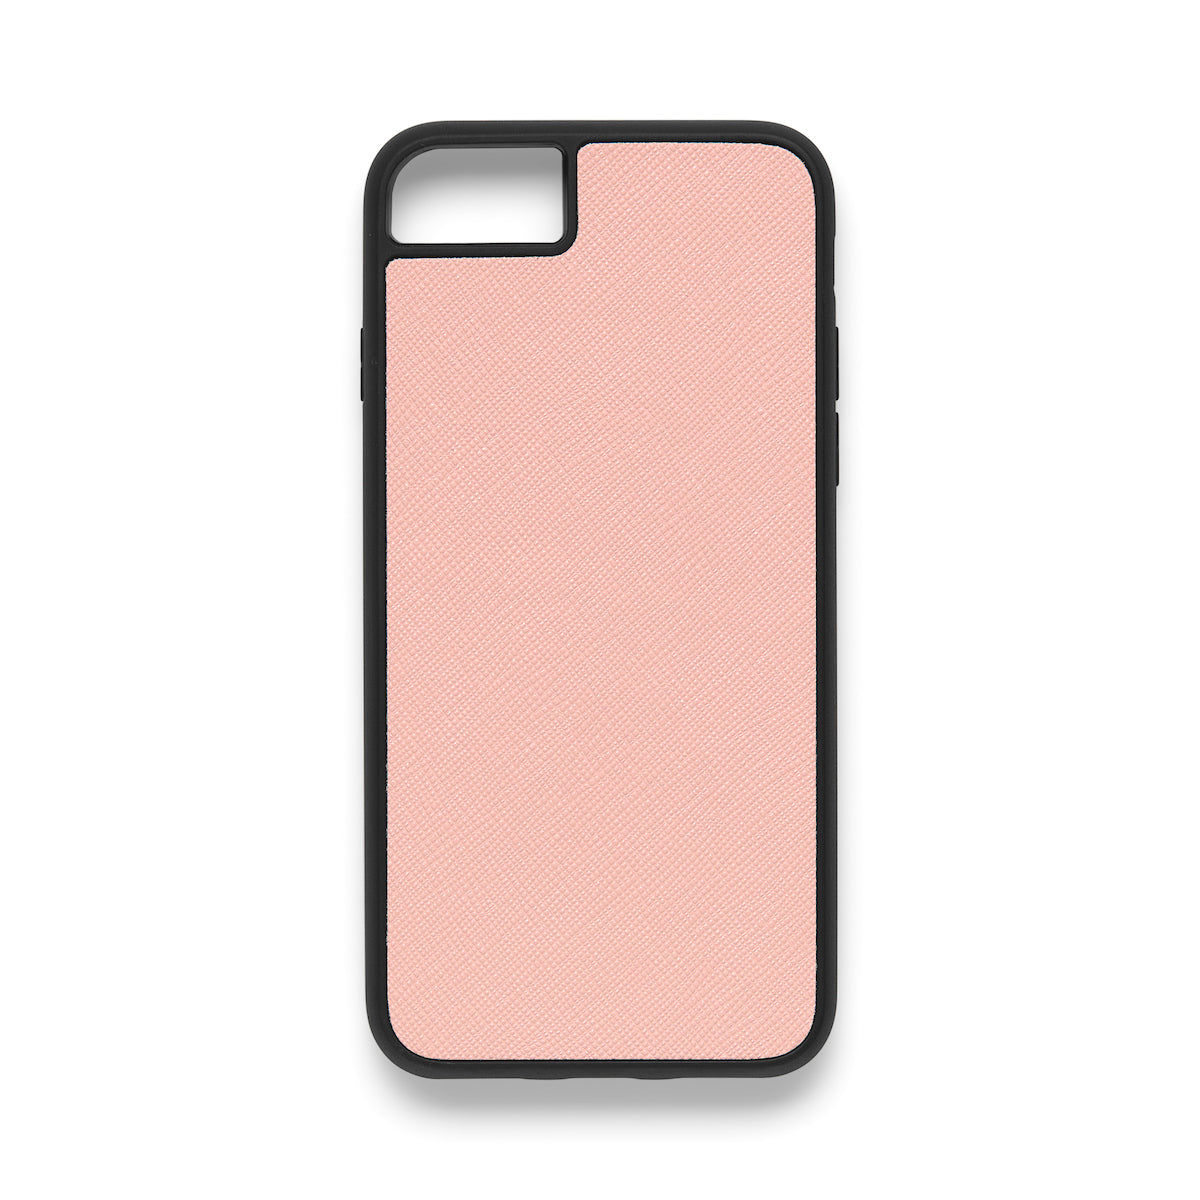 iPhone SE Case - Pale Pink